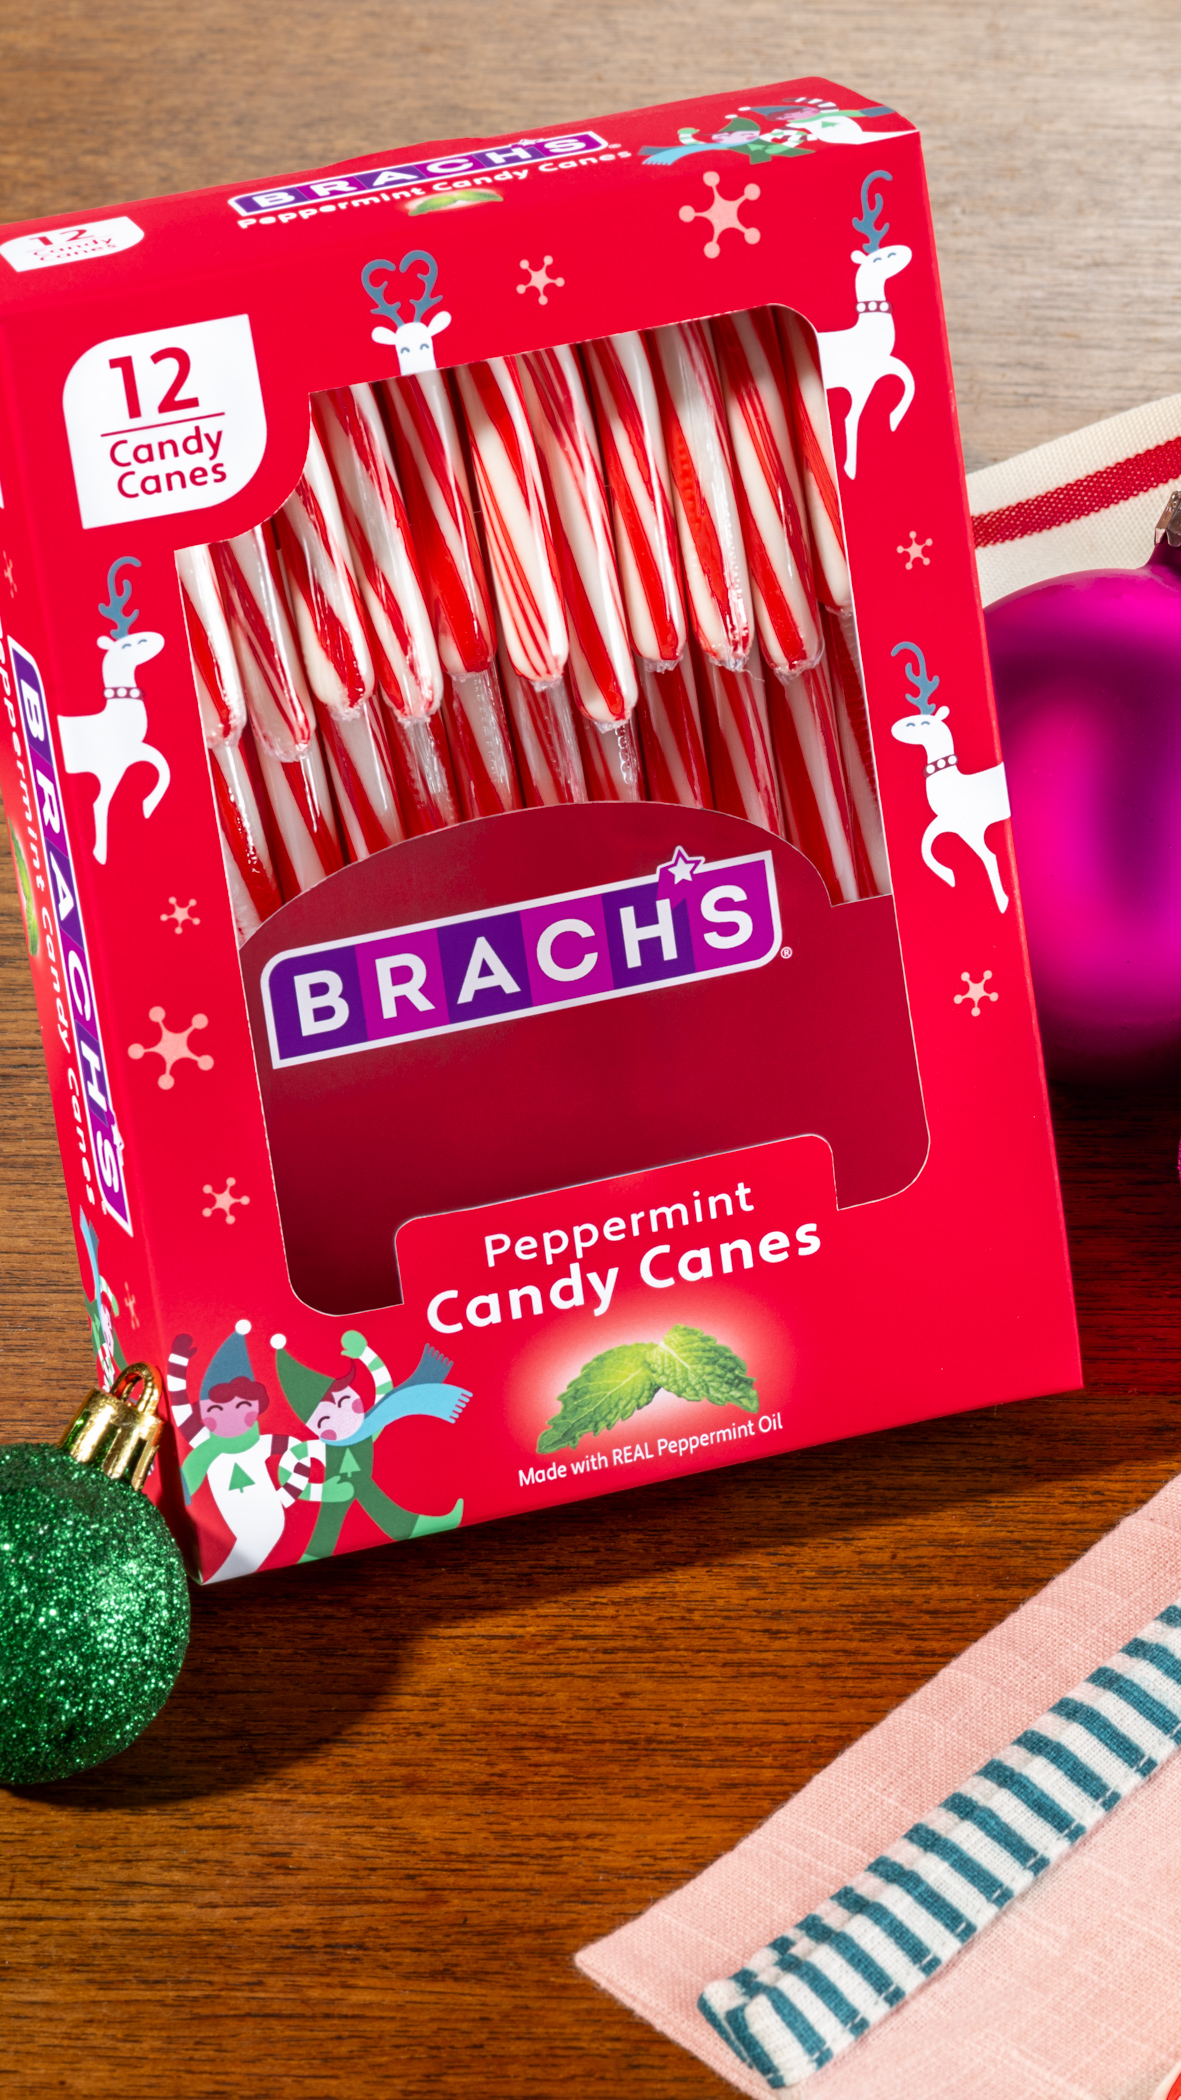 BRACH'S Introduces New 'Elf' Candy Lineup